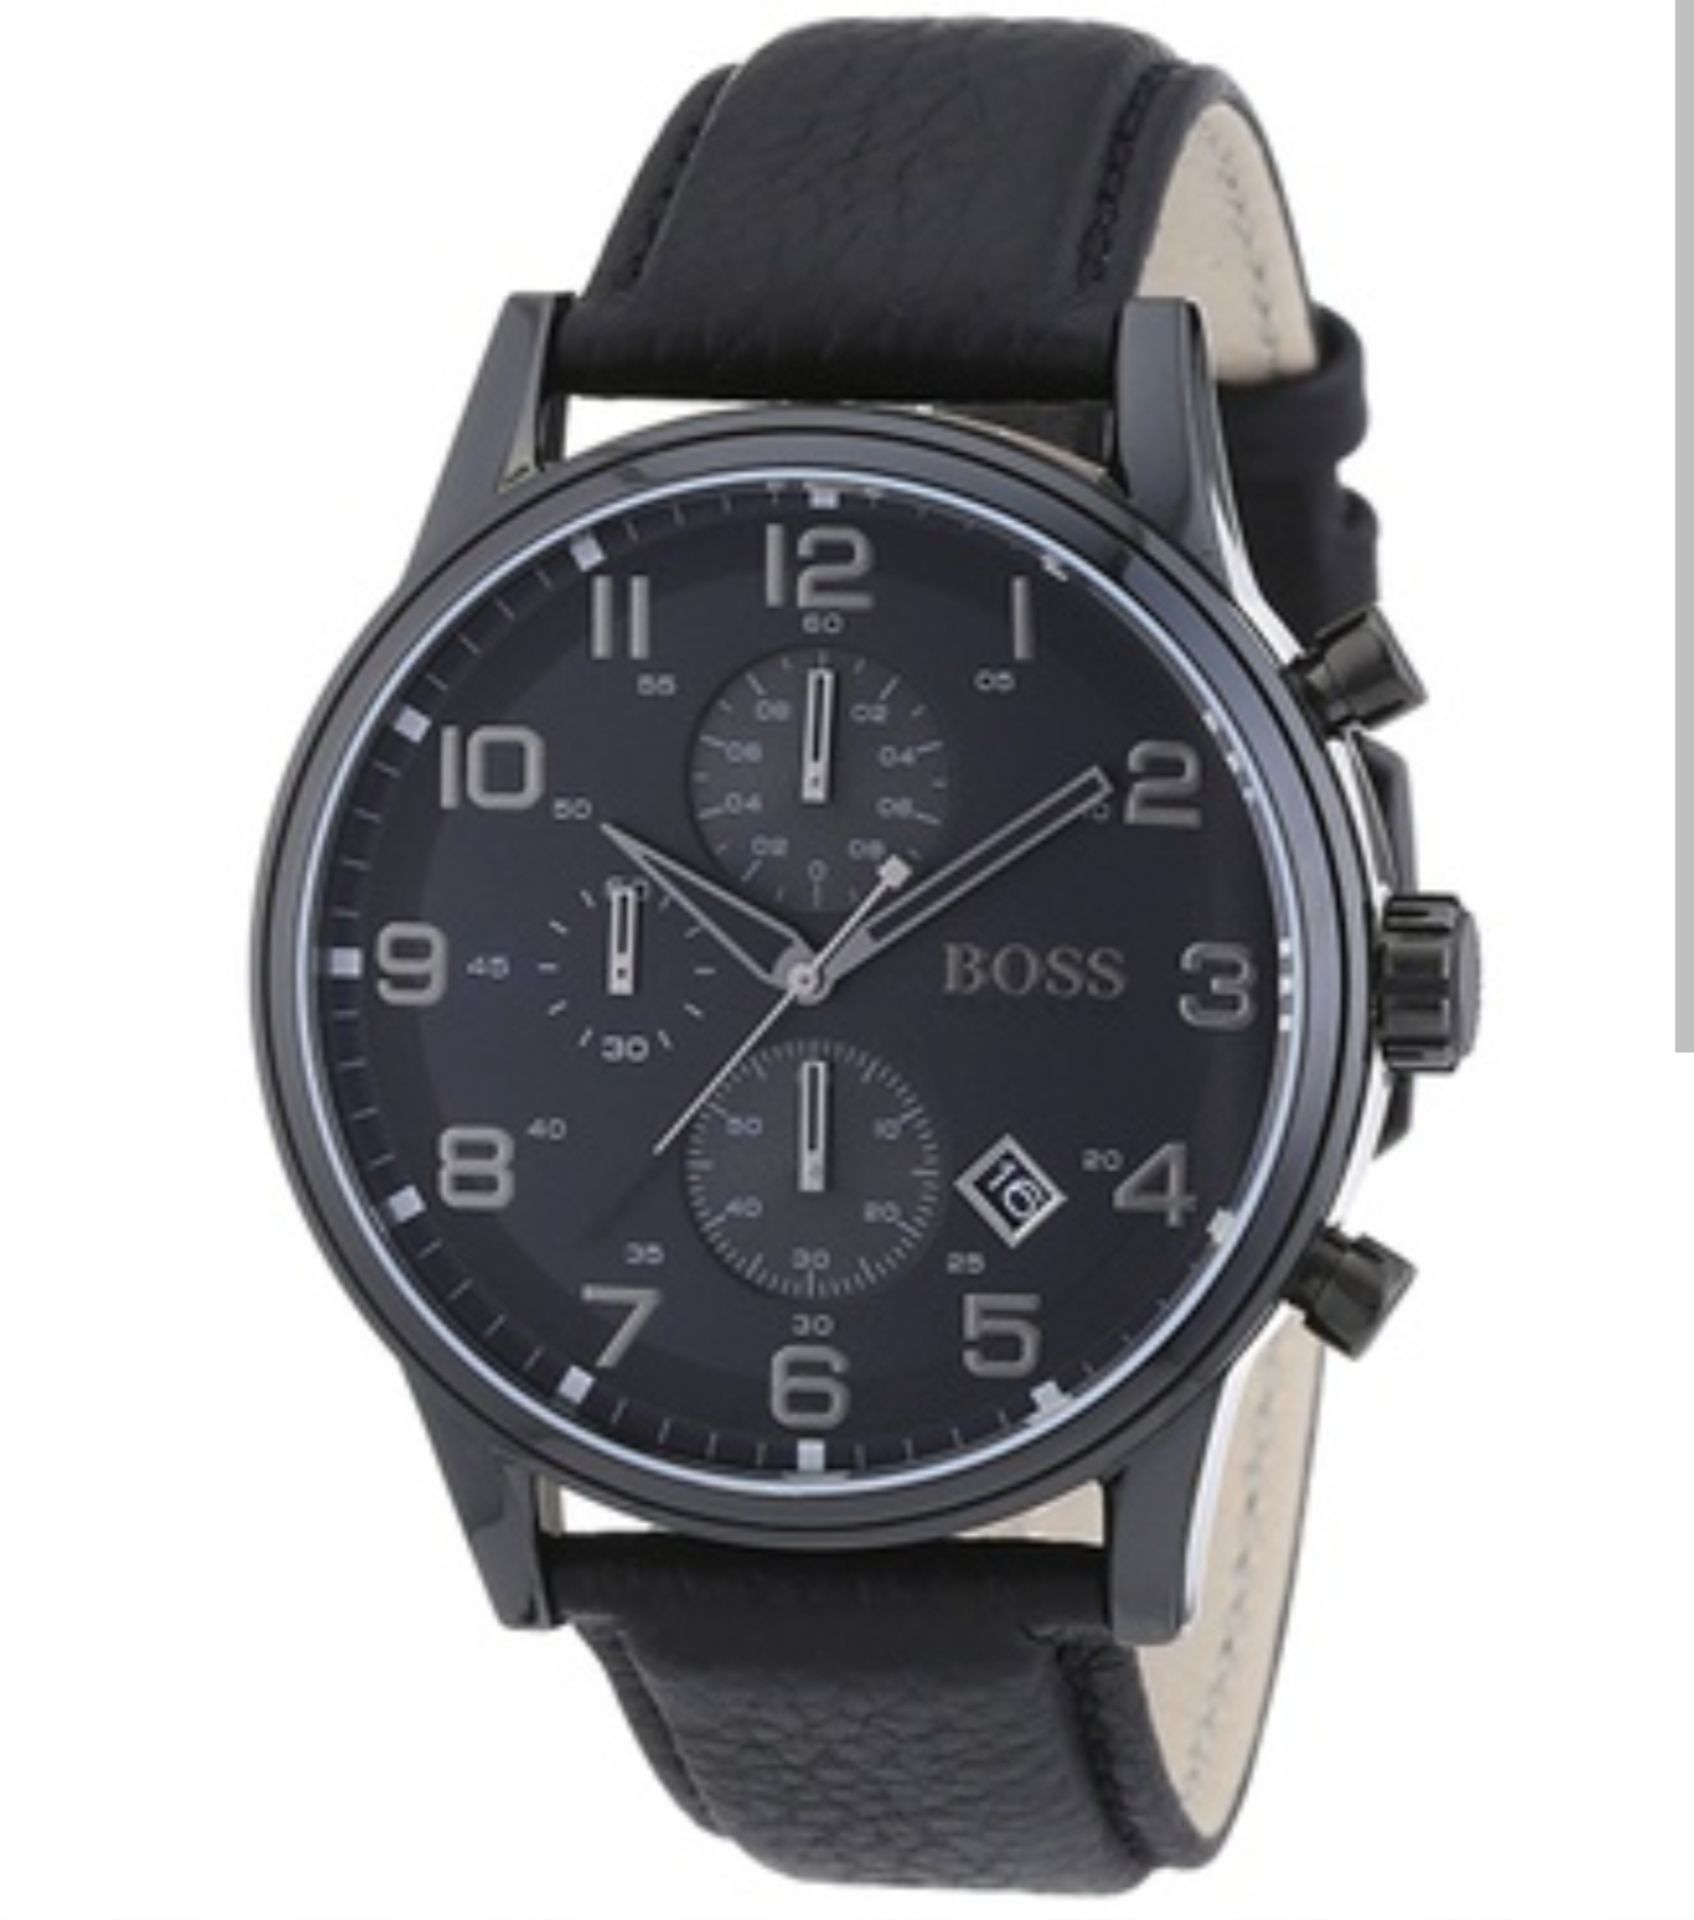 HUGO BOSS 1512567 Men's Aeroliner All Black Chronograph Watch - Image 4 of 6